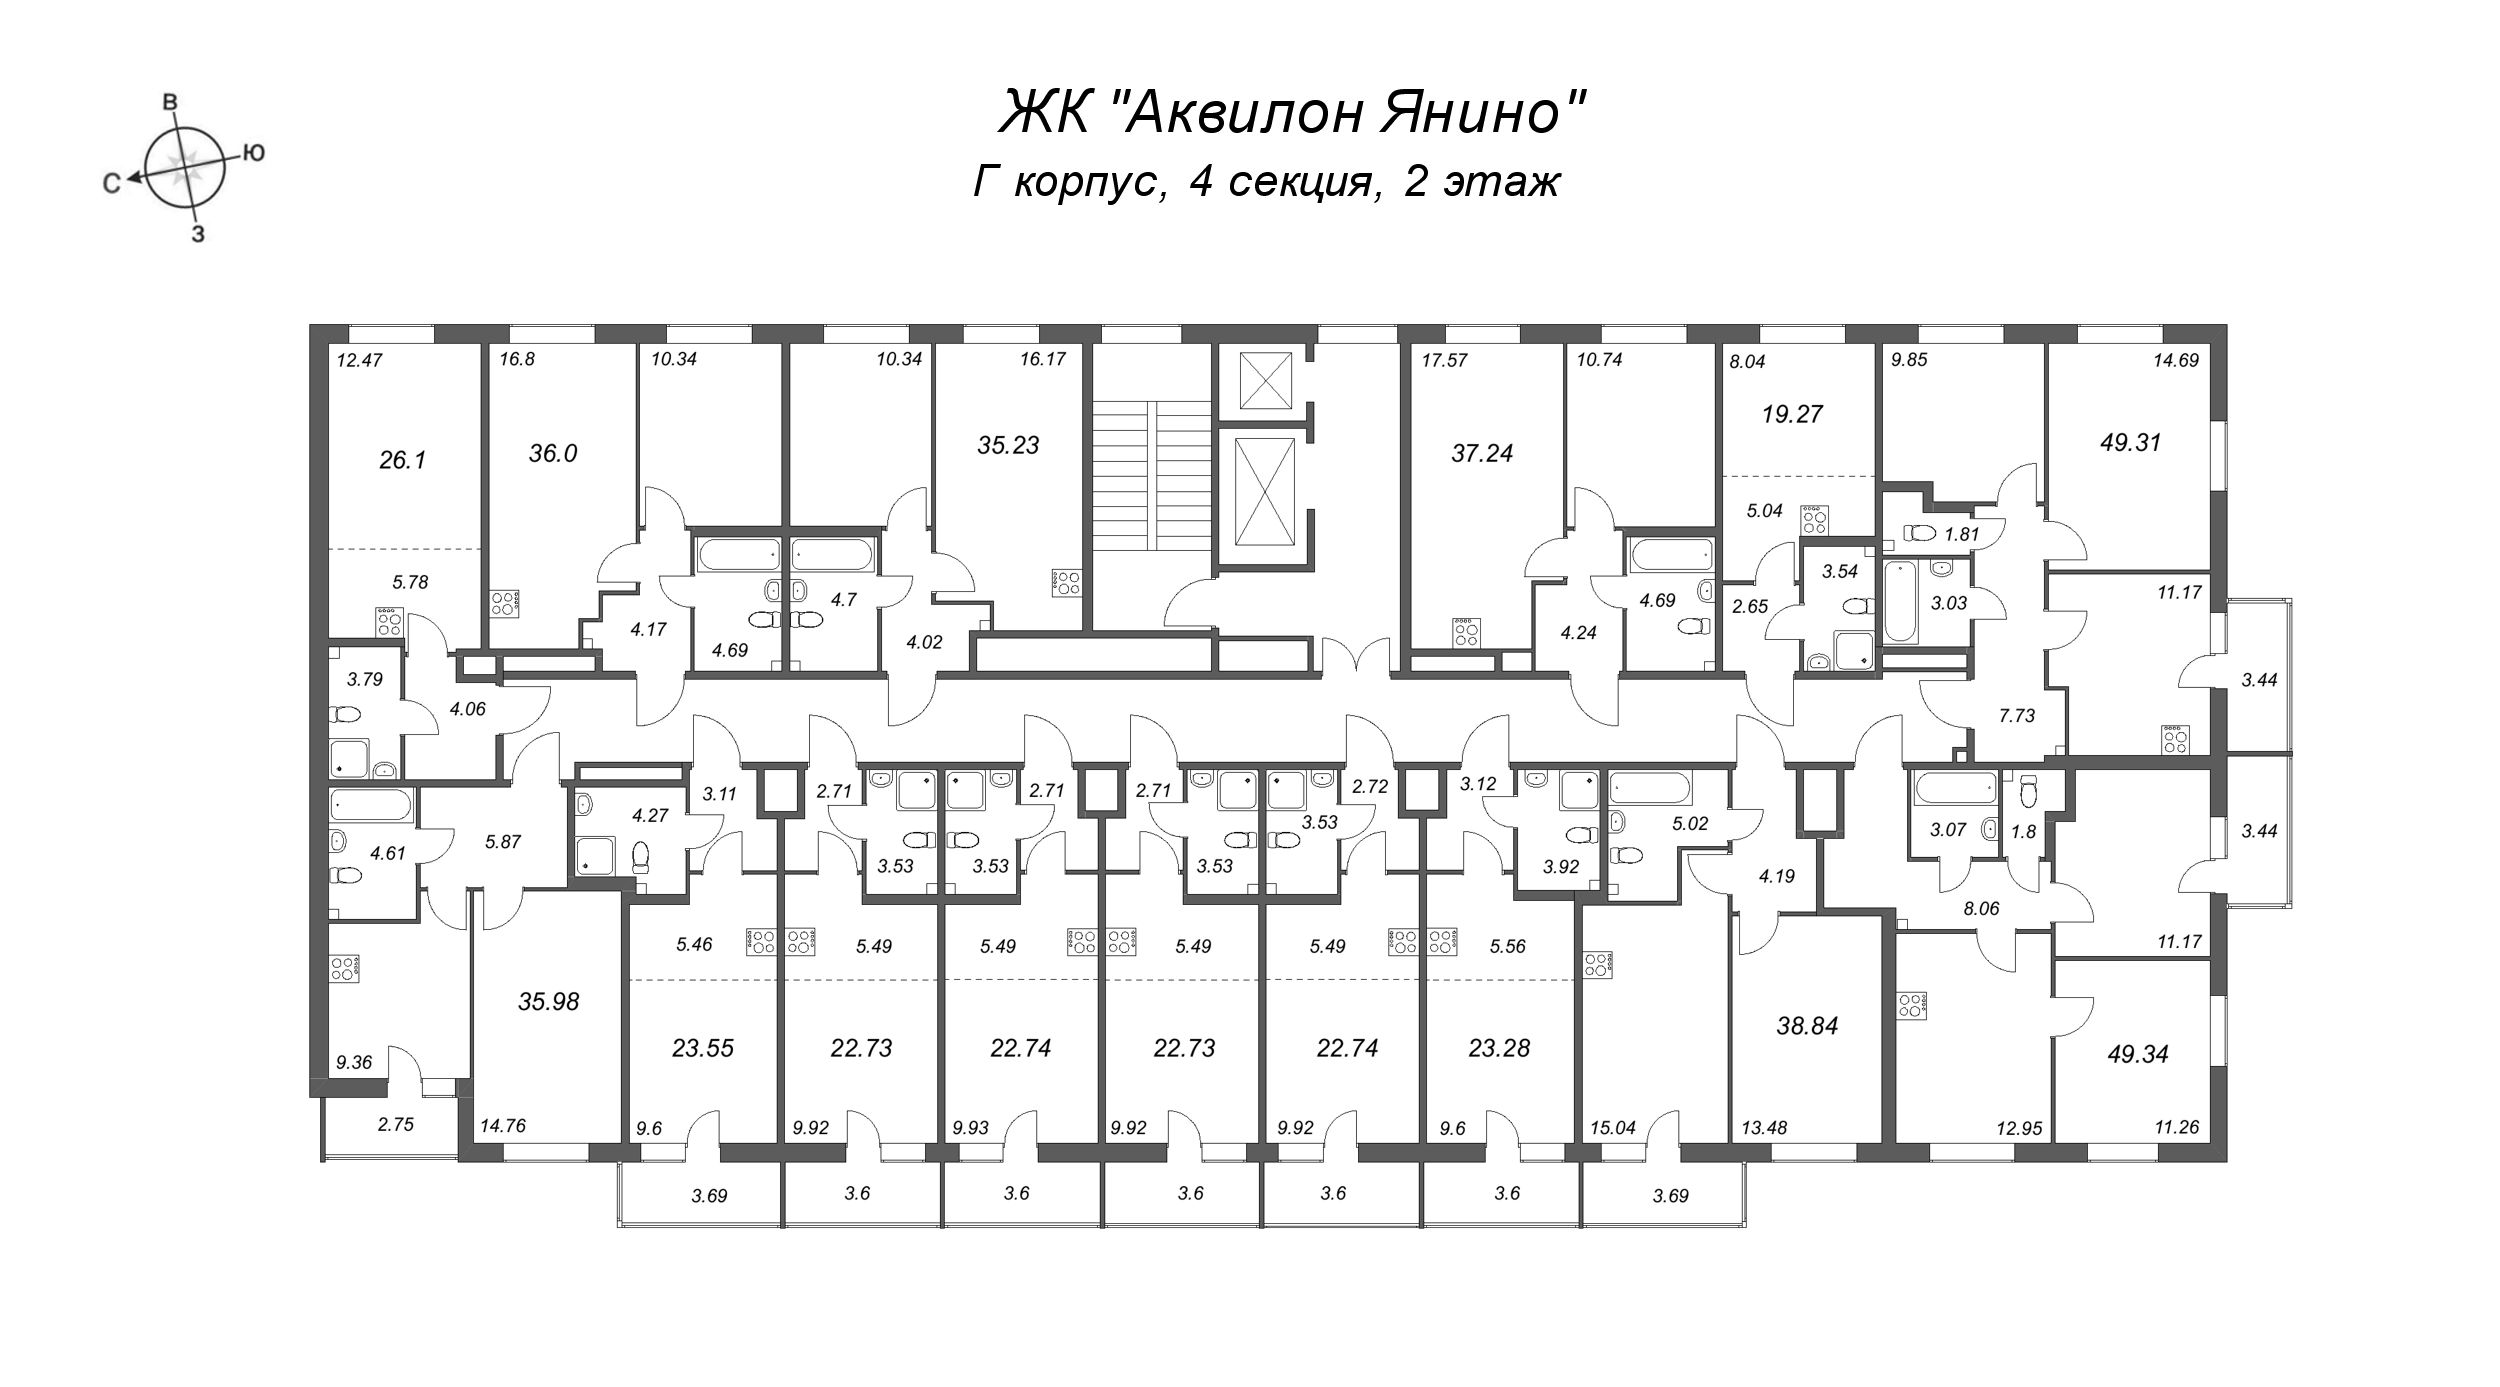 2-комнатная квартира, 49.31 м² в ЖК "Аквилон Янино" - планировка этажа